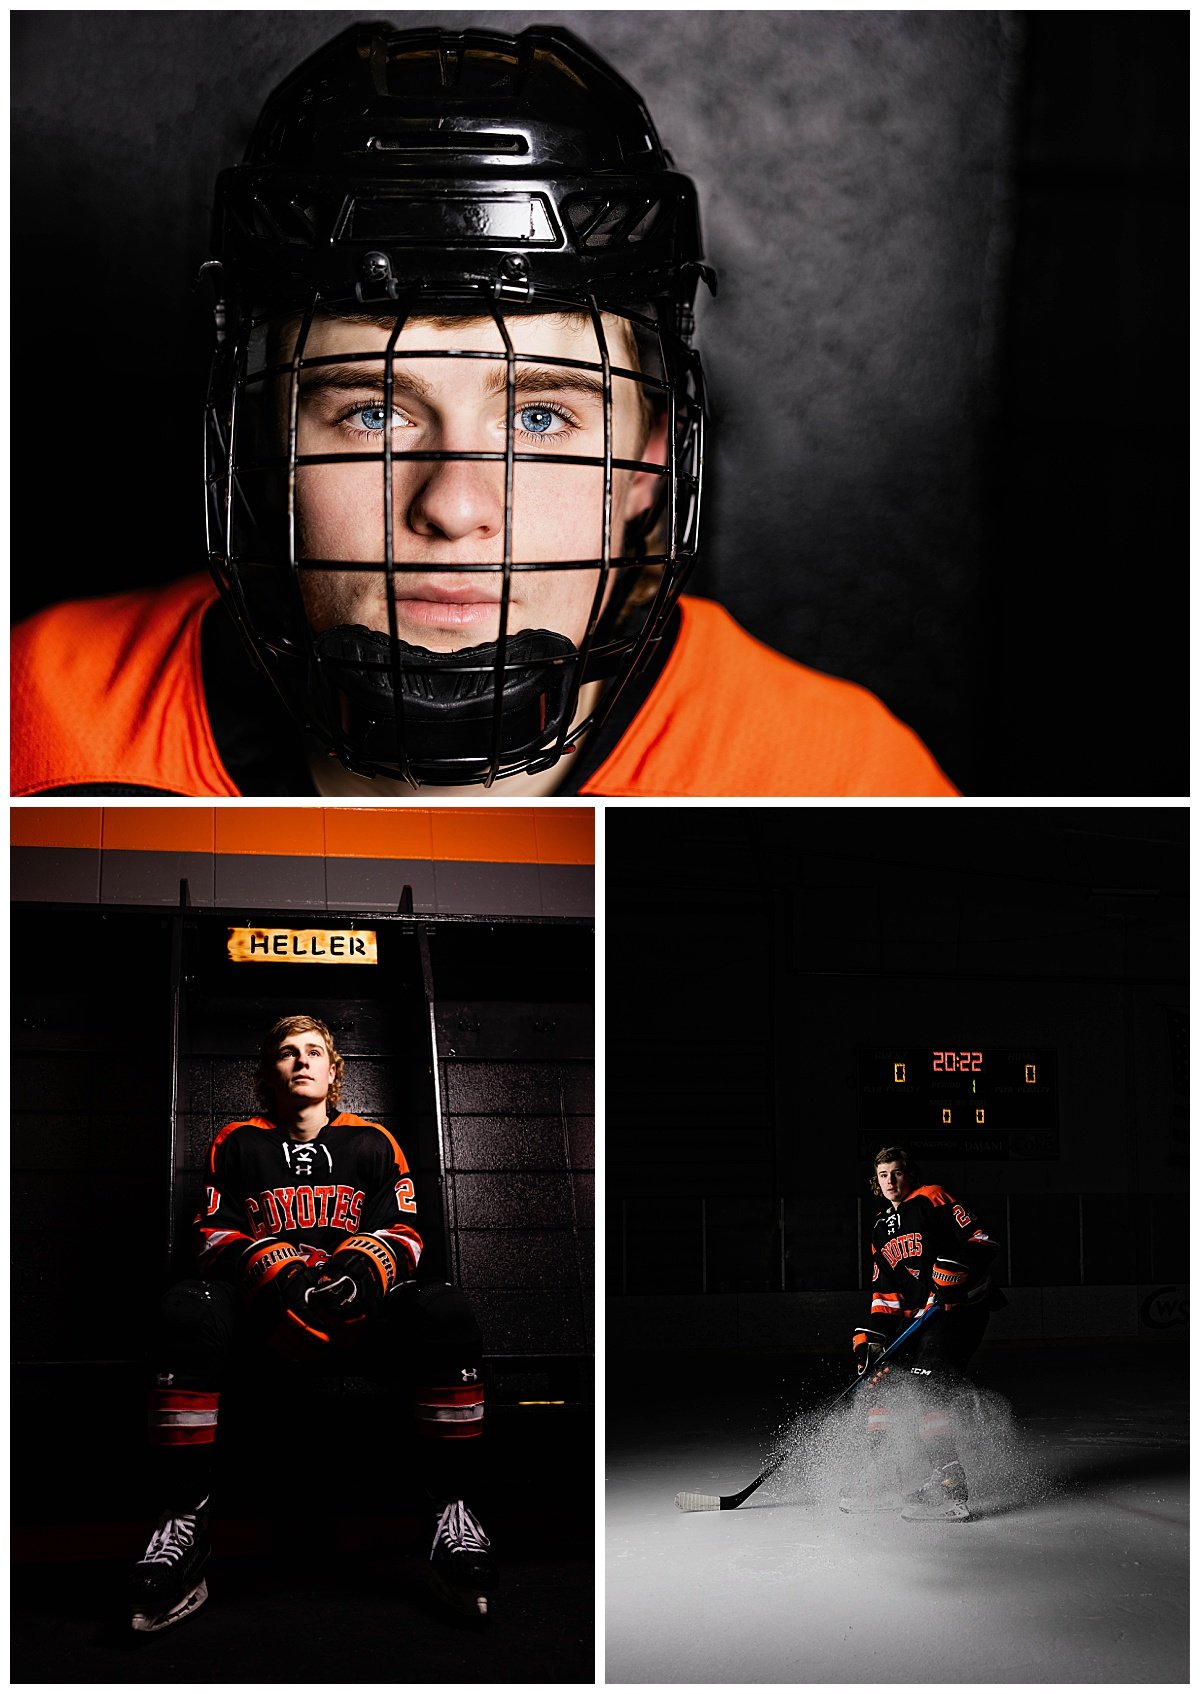 Senior sports photography for hockey.